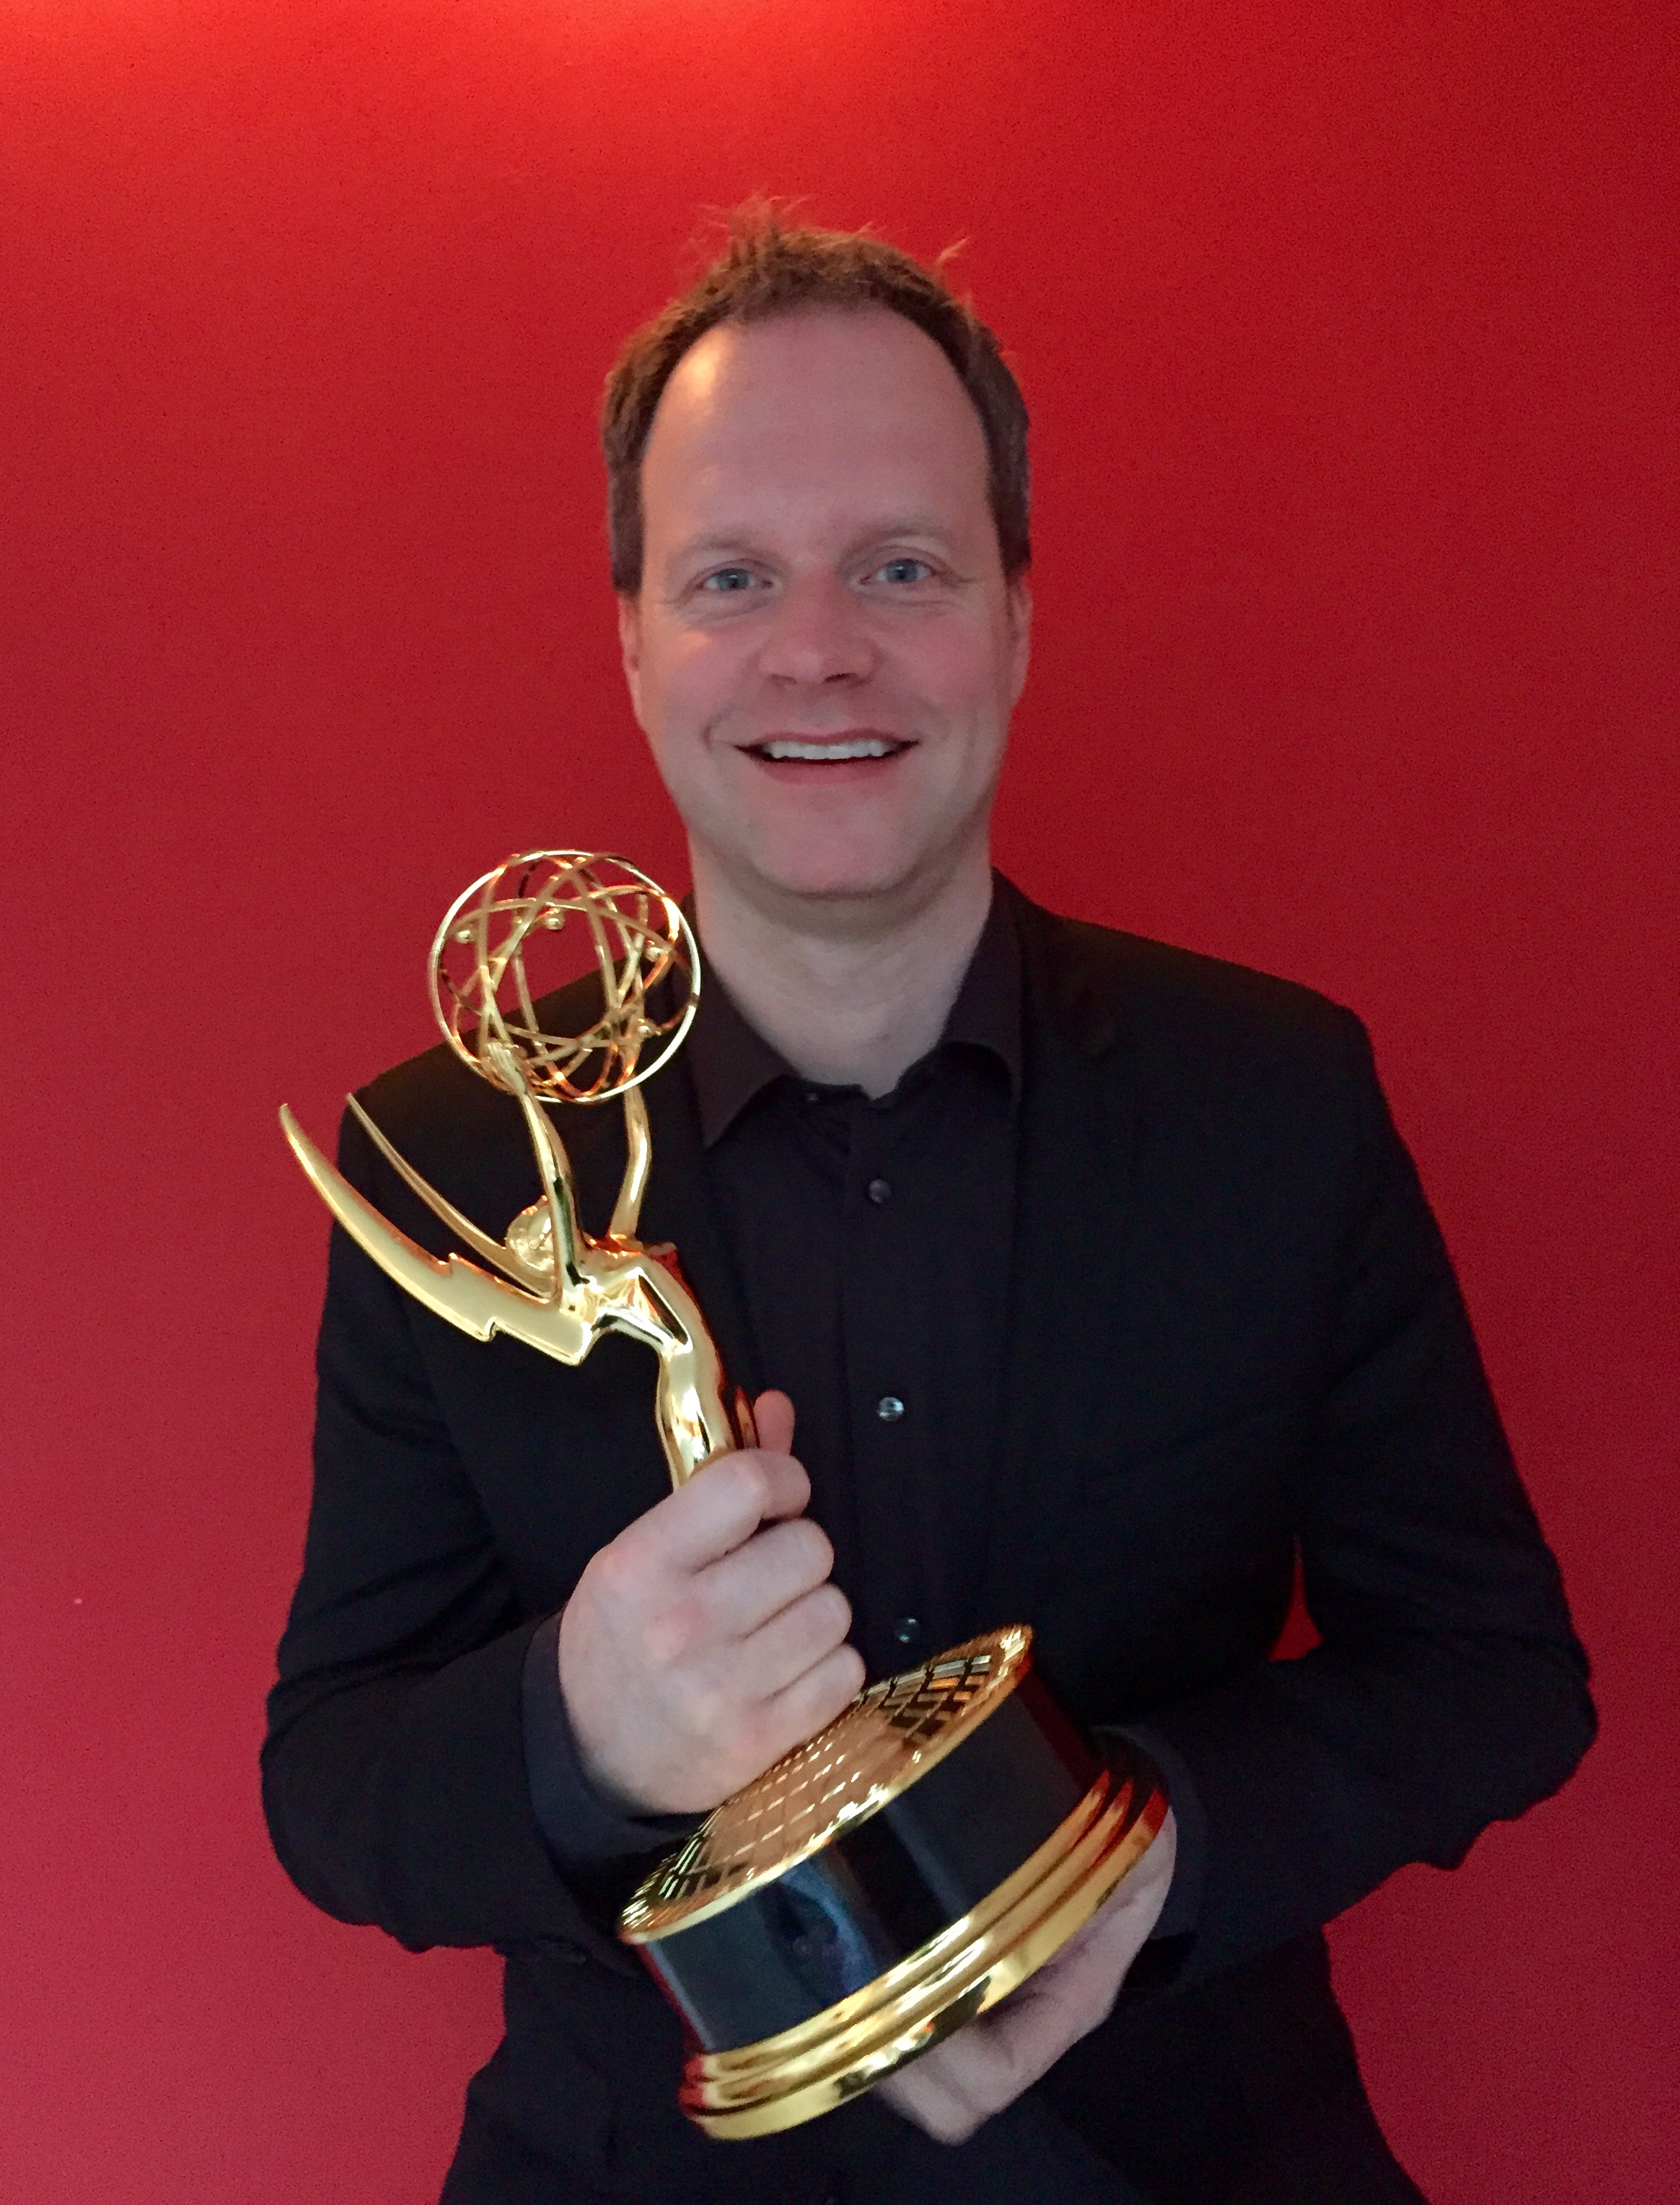 Joram Willink won International EMMY kids Award for Tv movie 'Anything Goes' (Alles mag)